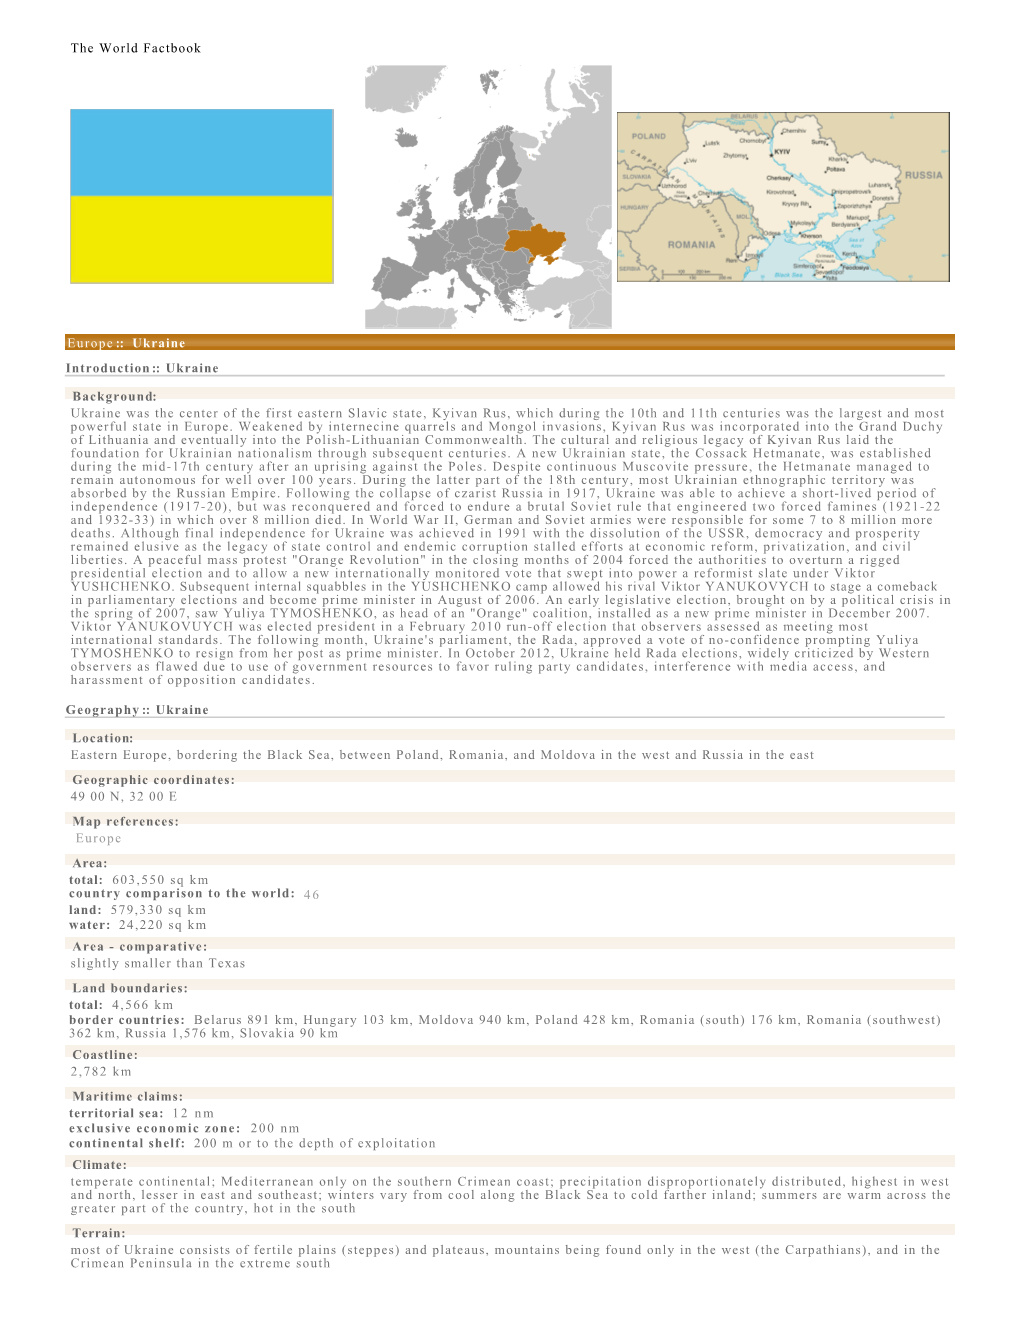 The World Factbook Europe :: Ukraine Introduction